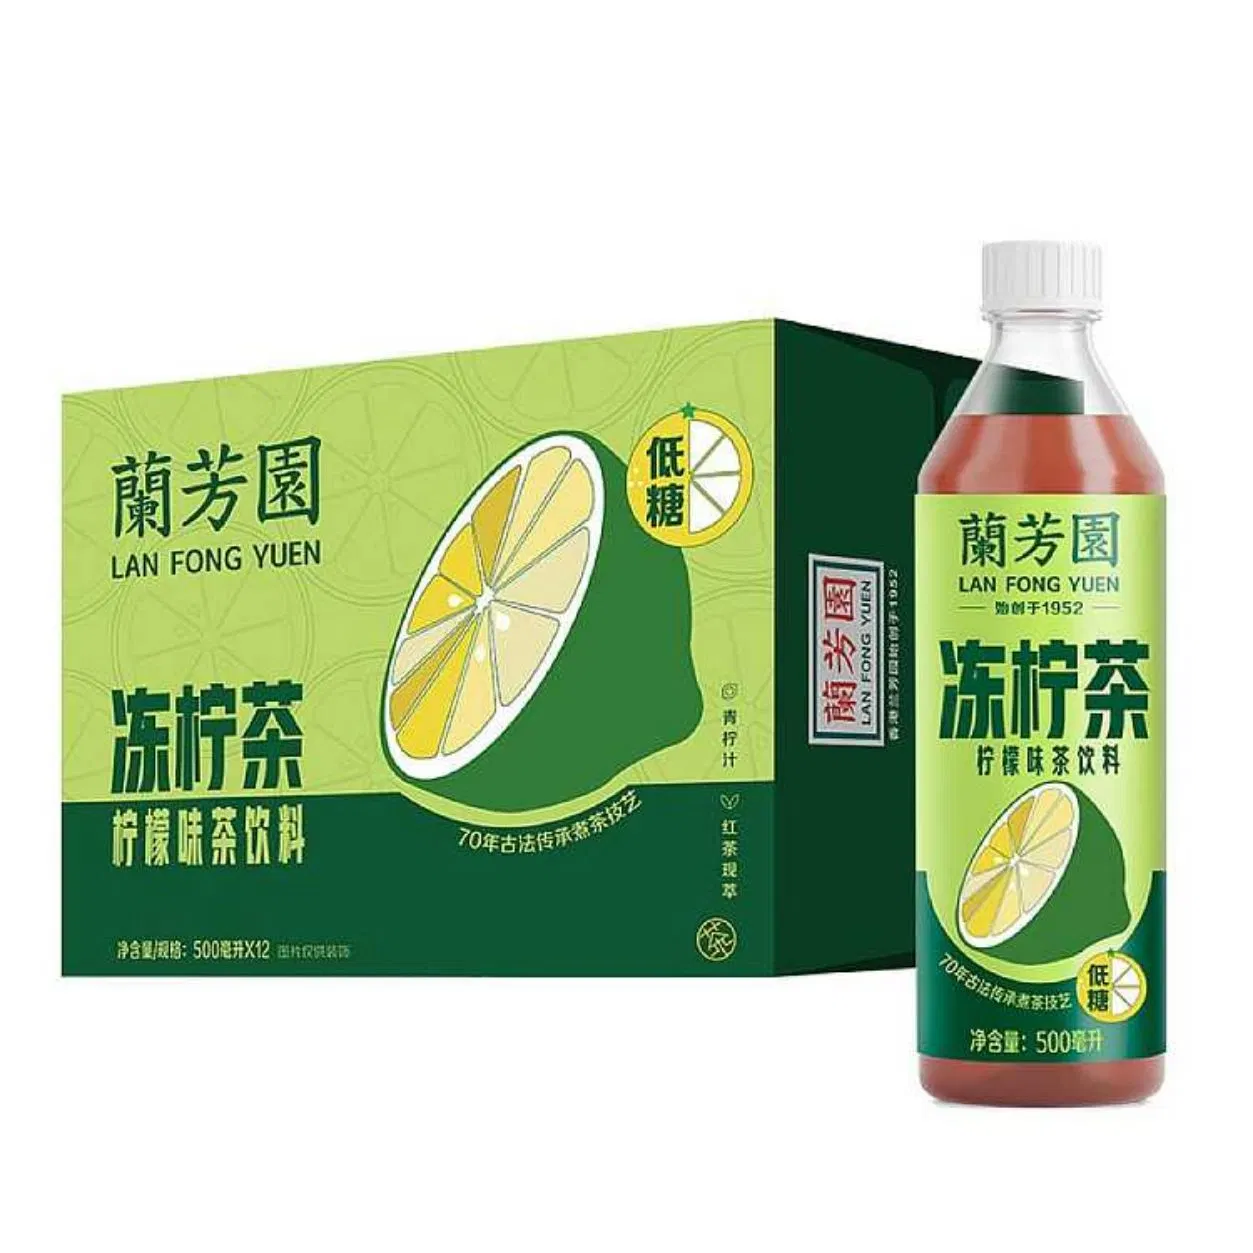 Chill con LAN Fong Yuen: Auténtica felicidad de té de limón helado